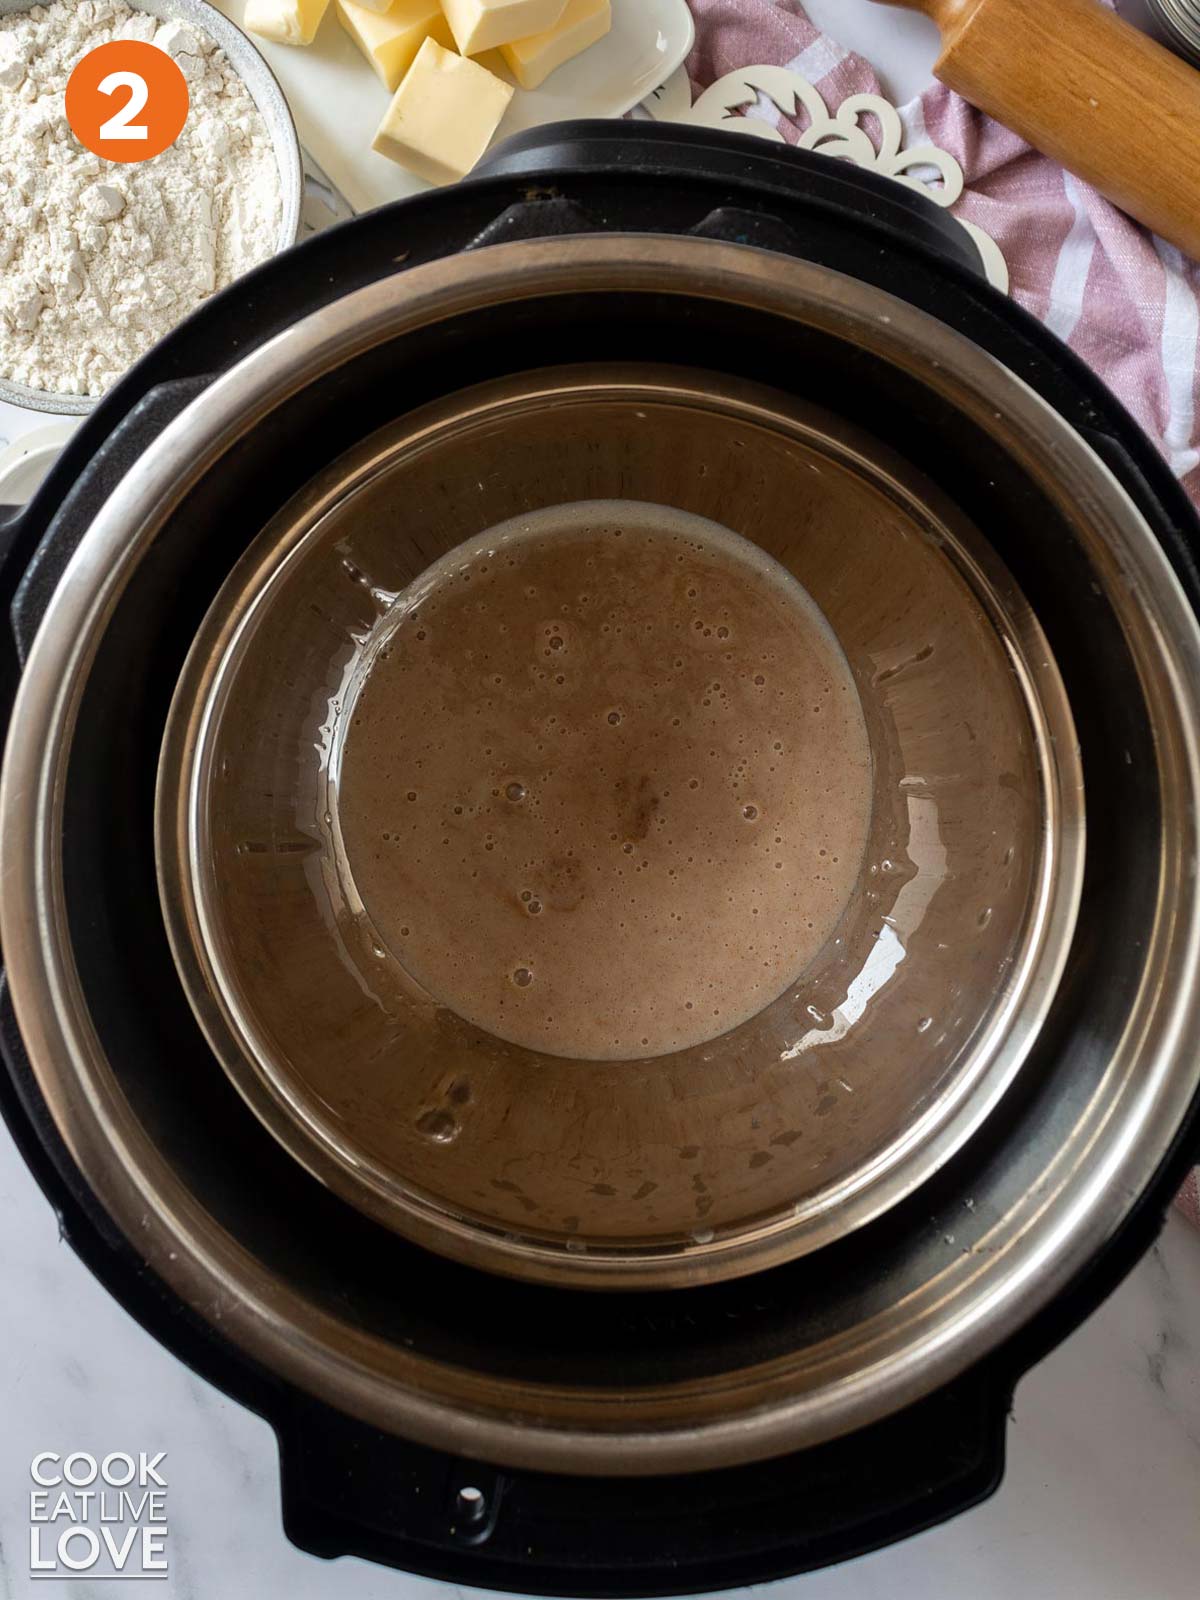 Bowl of manjar blanco ingredients inside the instant pot.